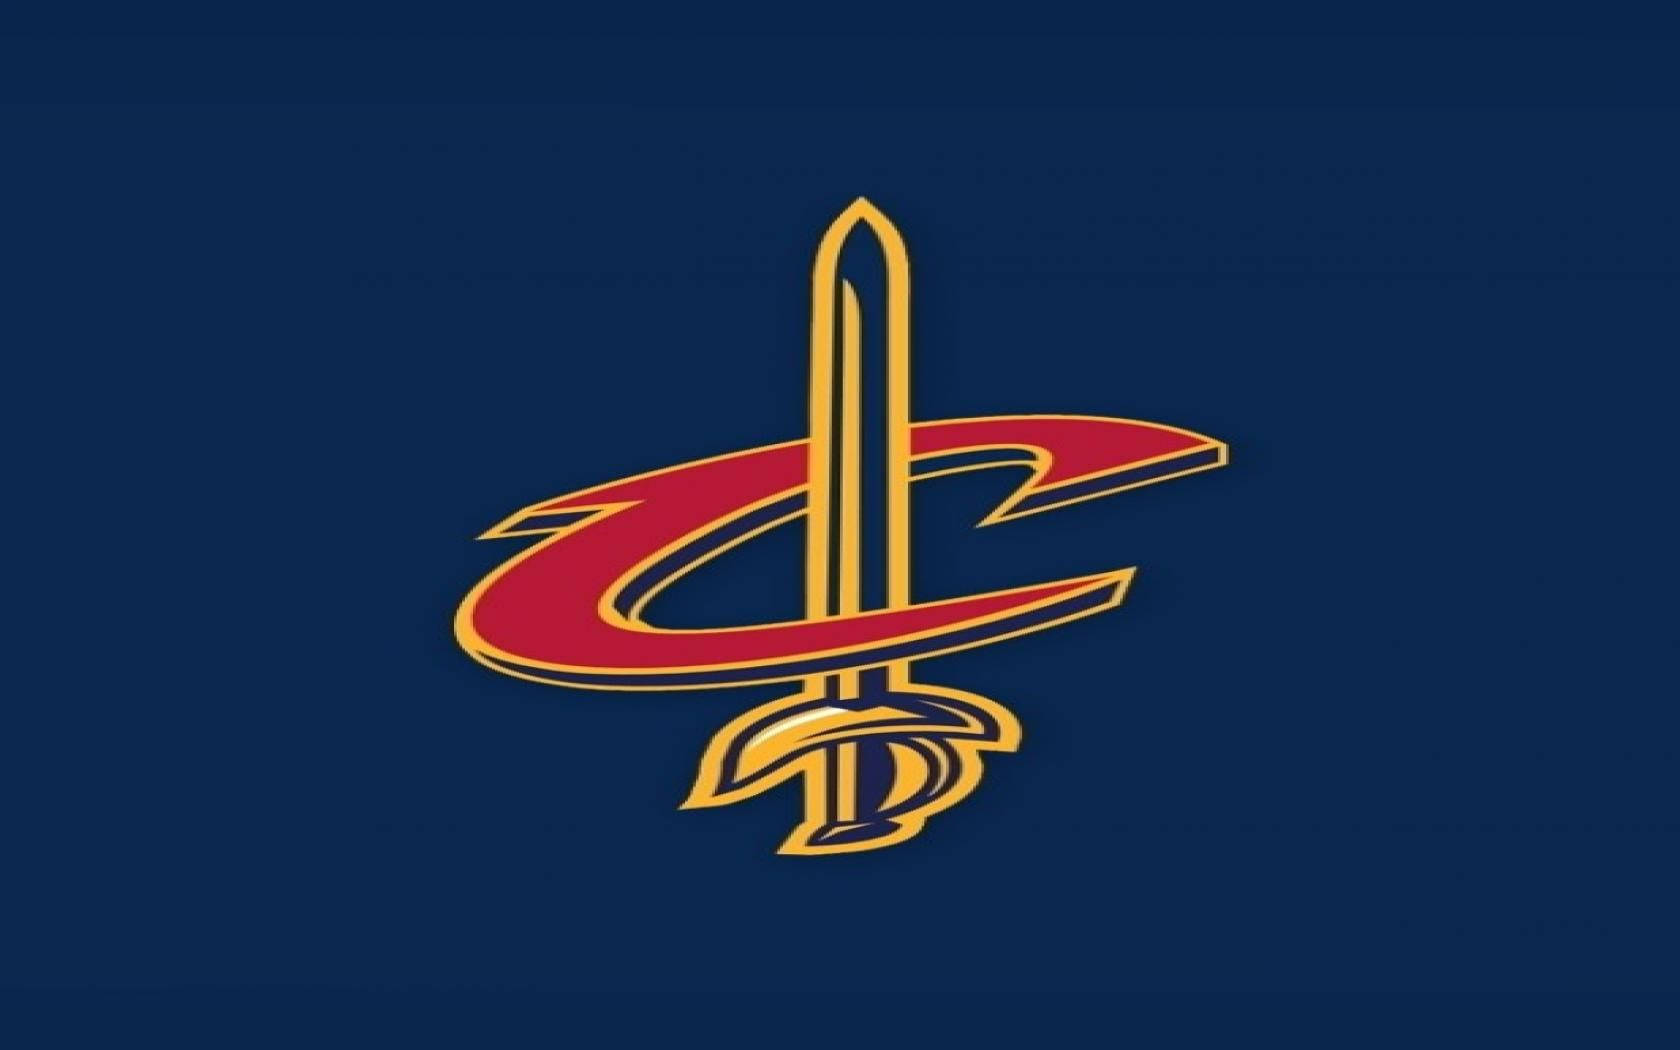 Cool Nba Cleveland Cavaliers Emblem